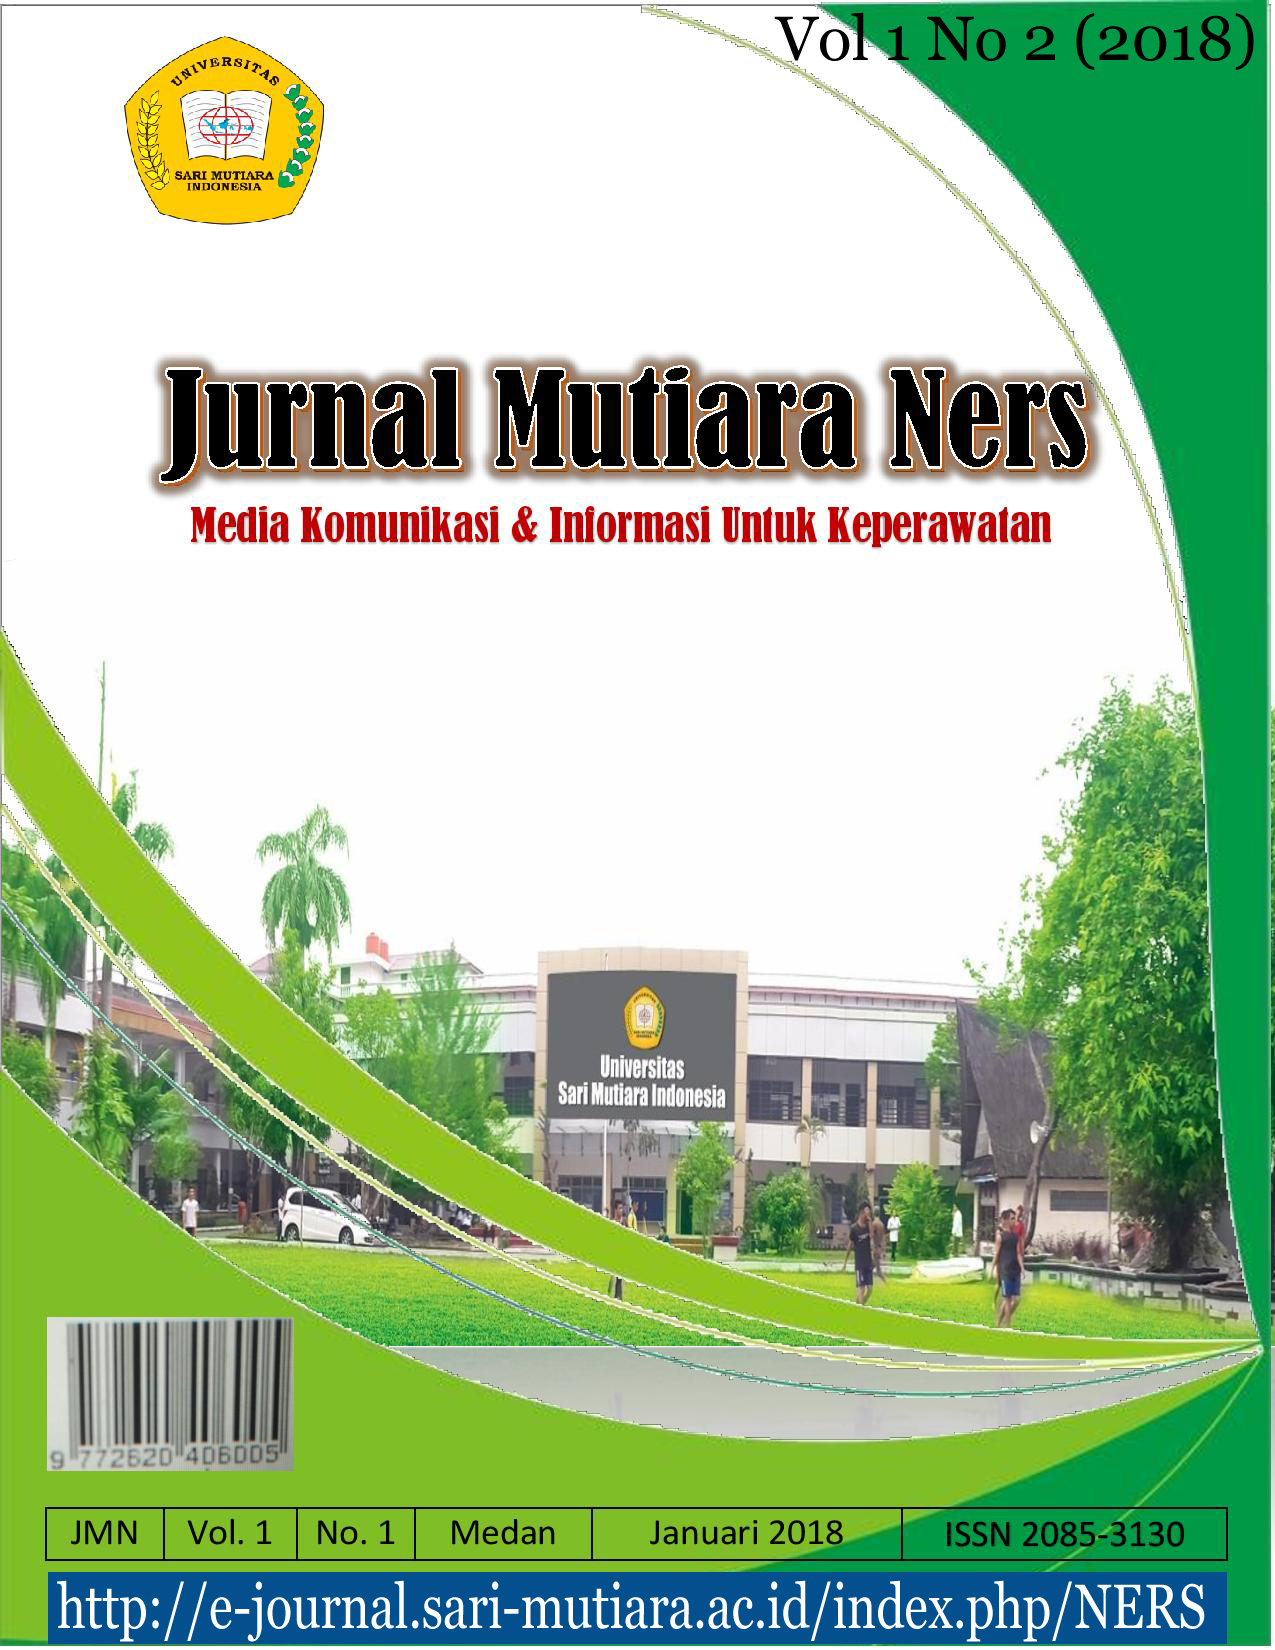 					View Vol. 1 No. 2 (2018): JURNAL MUTIARA NERS
				